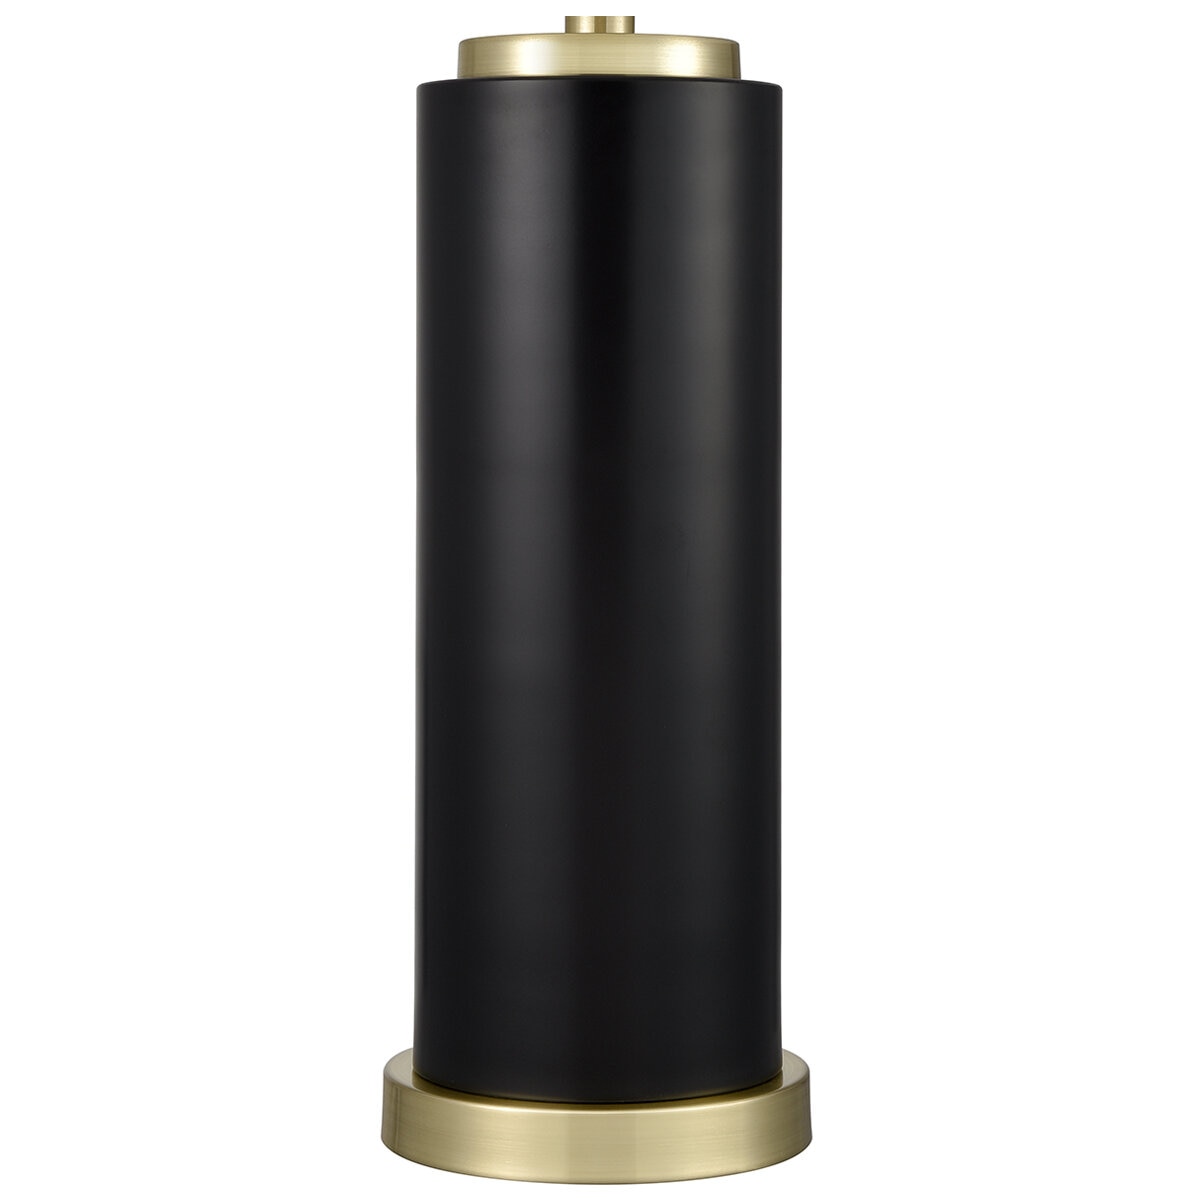 Bridgeport Designs Black Metal Cylinder Table Lamp Black and Honey Brass